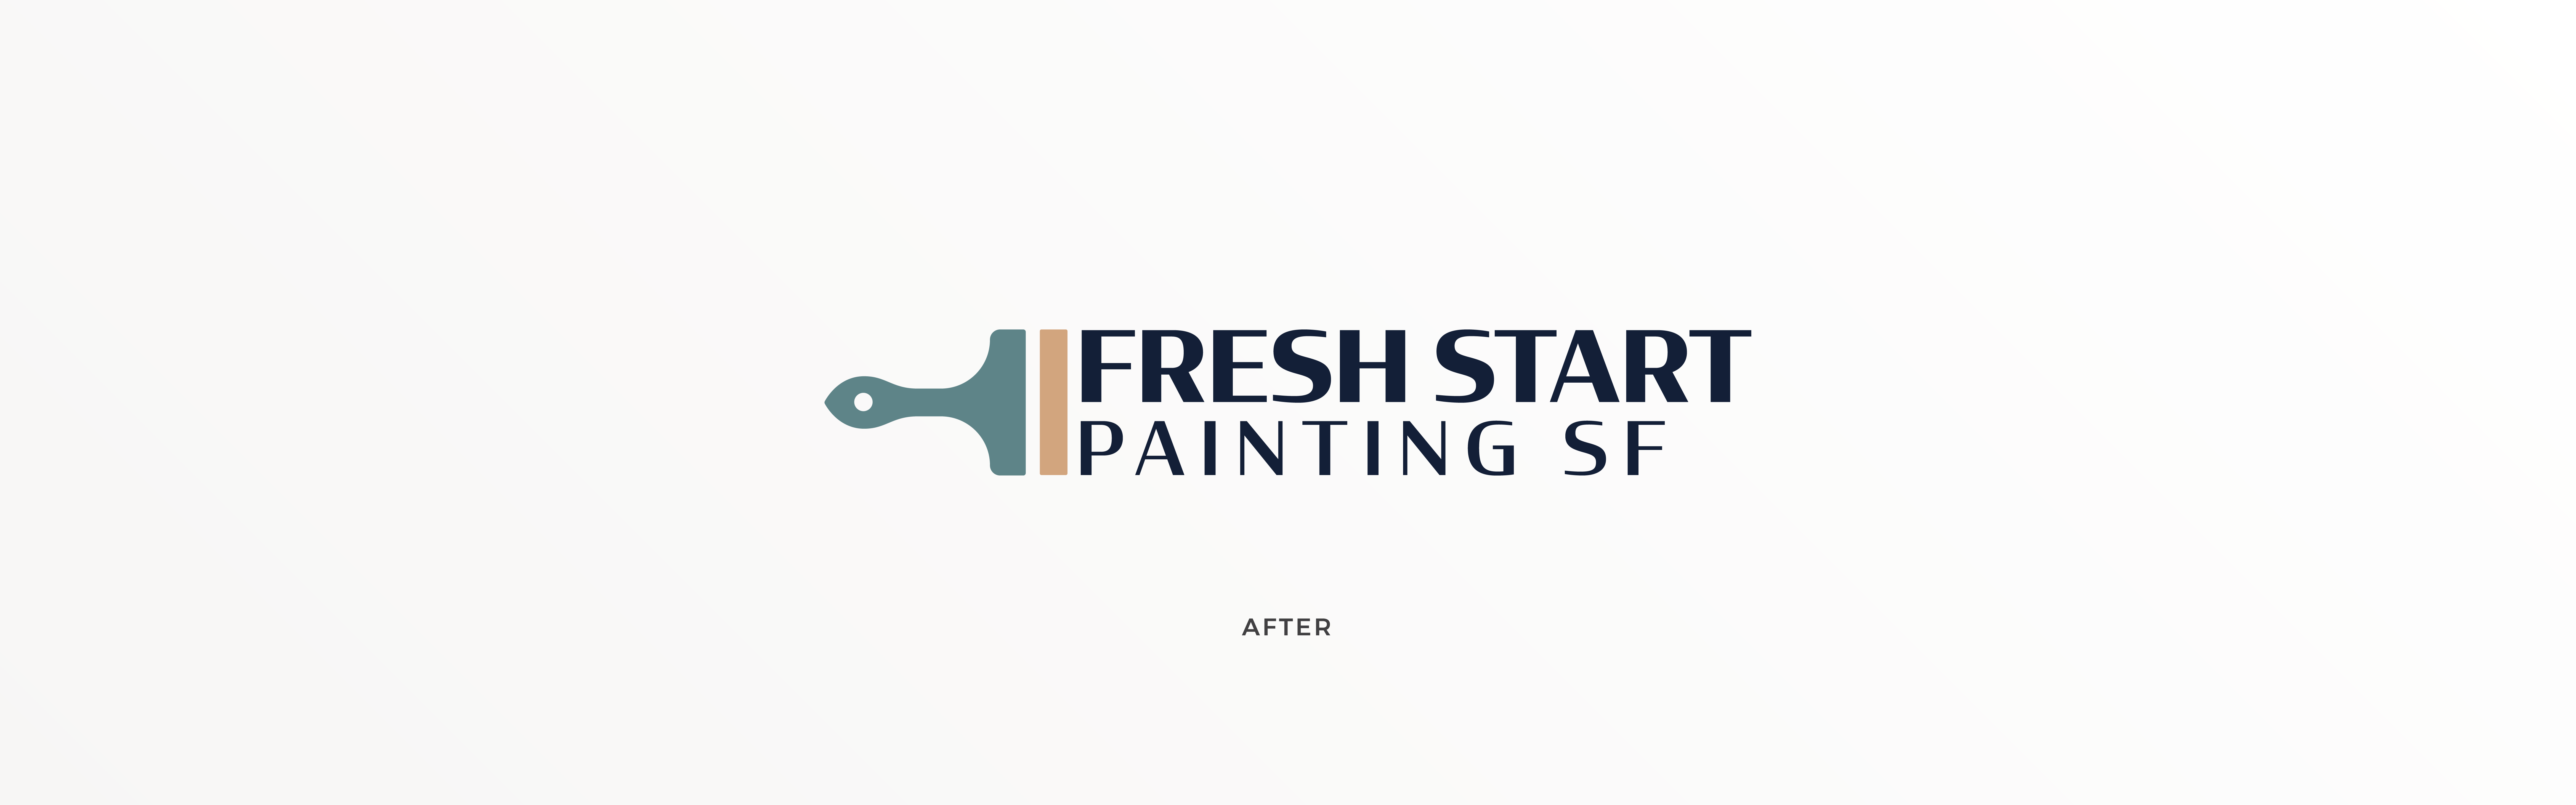 Fresh Start Painting logo after